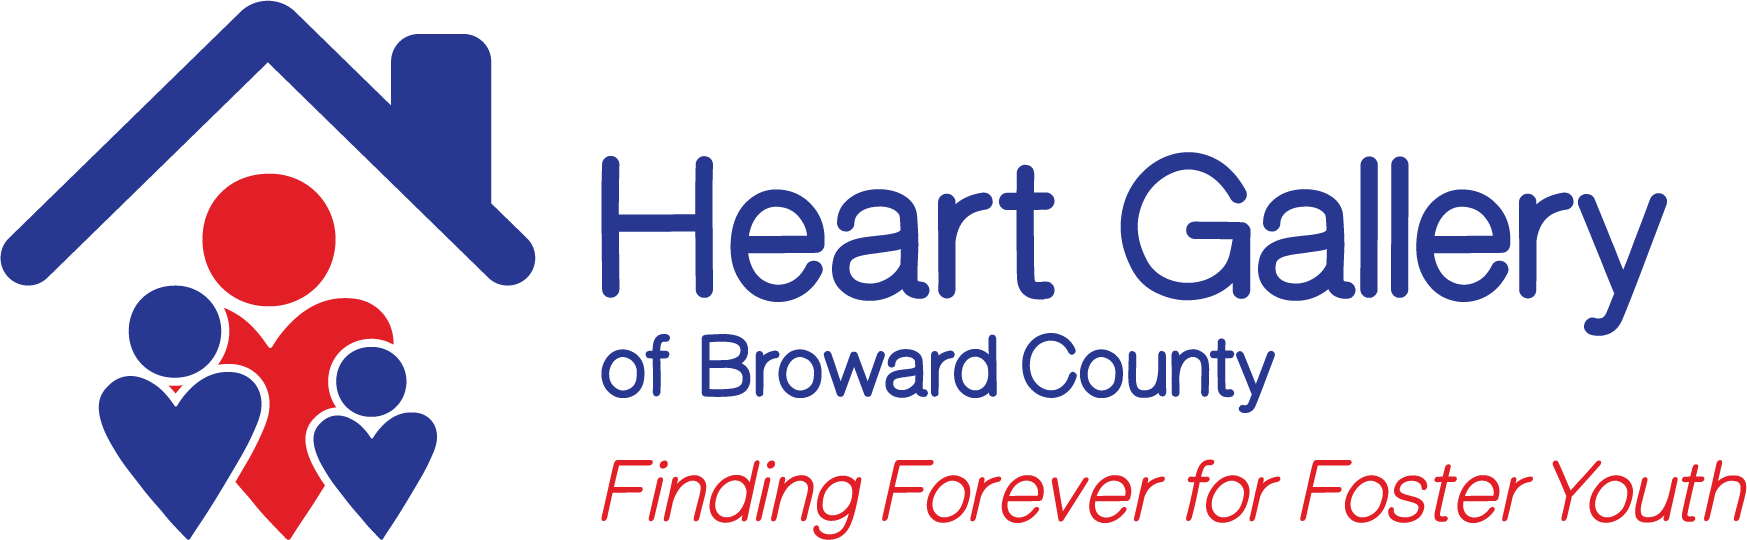 Heart Gallery of Broward